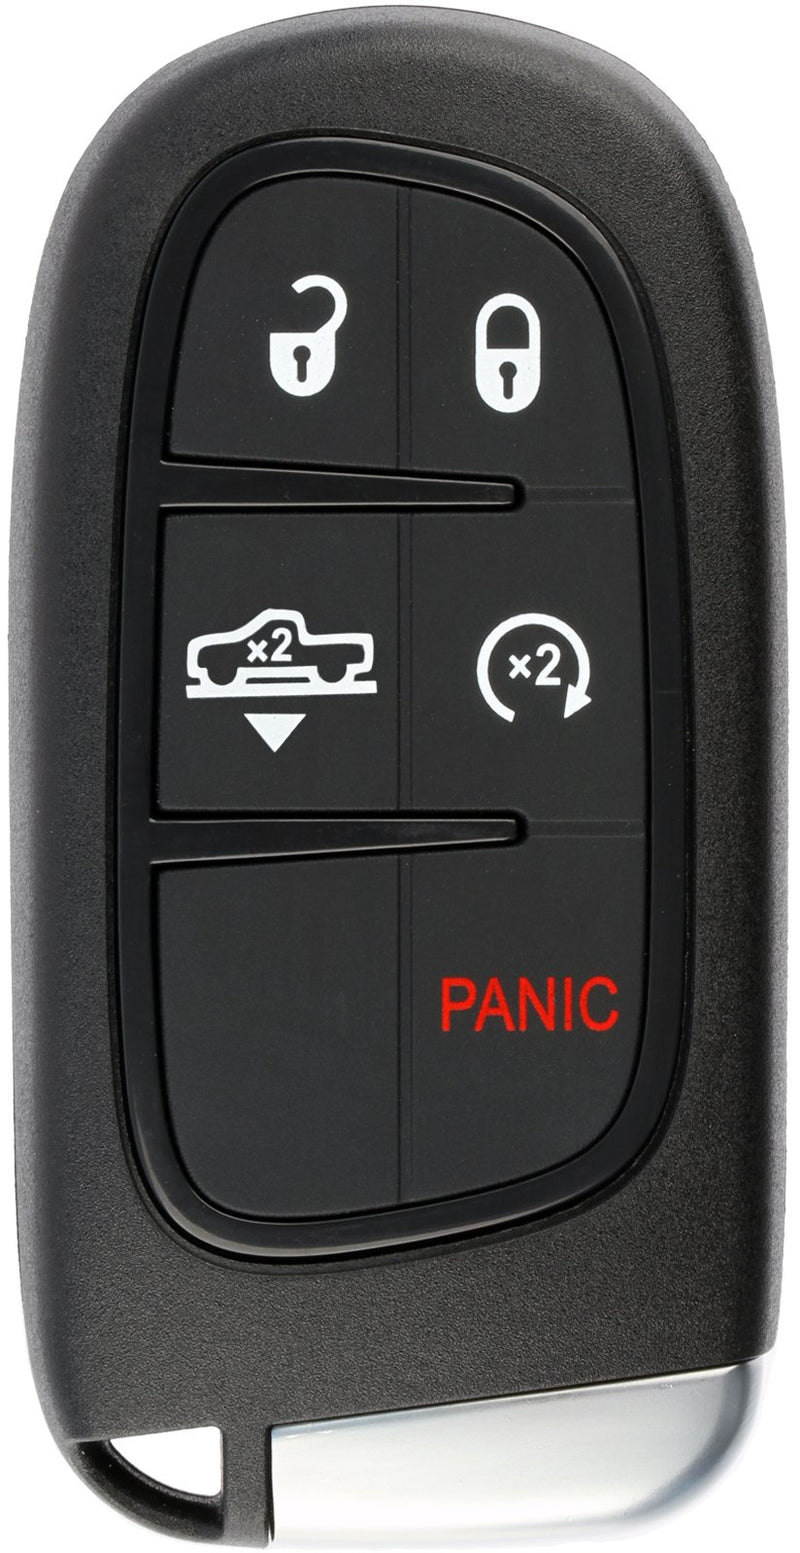  [AUSTRALIA] - KeylessOption Keyless Entry Remote Start Smart Car Key Fob Alarm for Air Suspension Dodge Ram 1500, 2500, GQ4-54T 1x 5 button remote